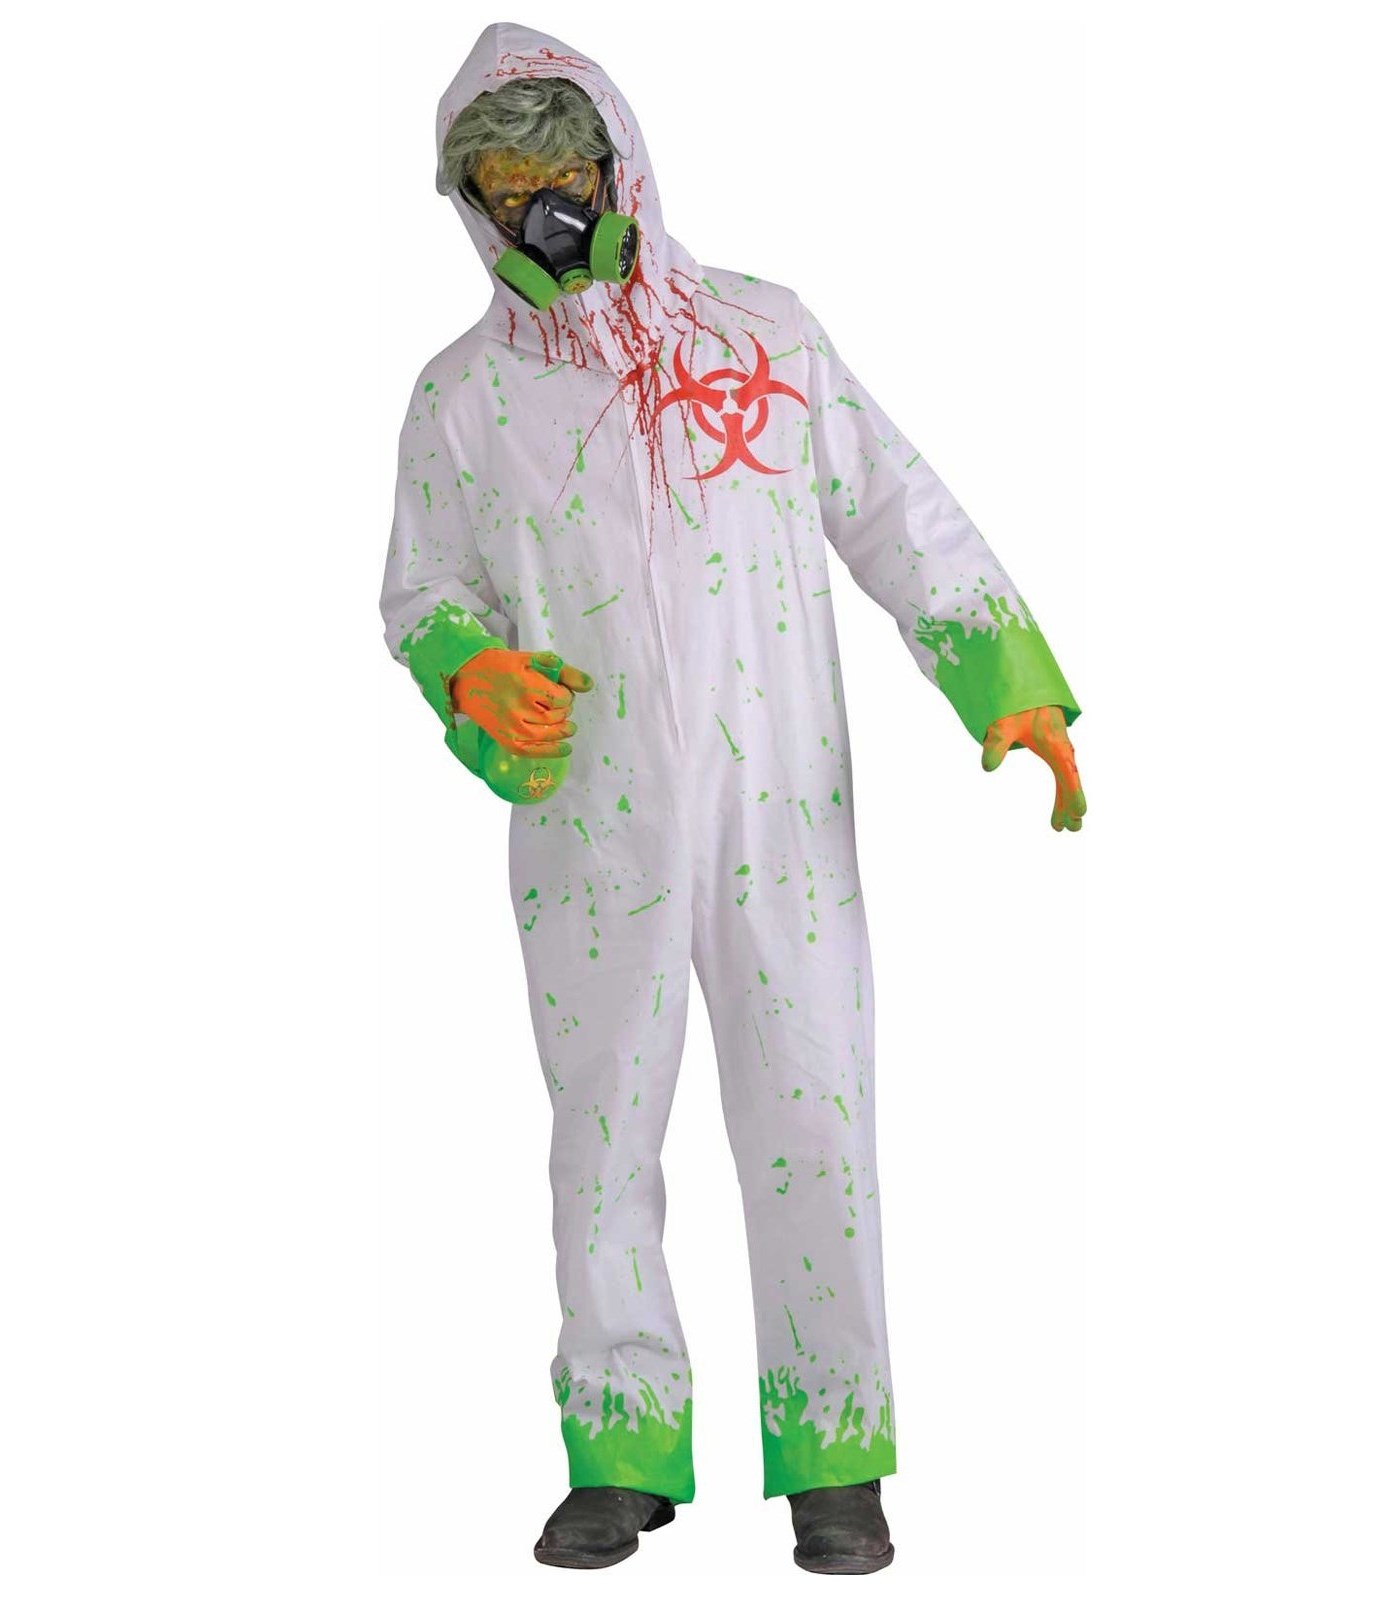 Biohazard Zombie White Jumpsuit Adult Costume